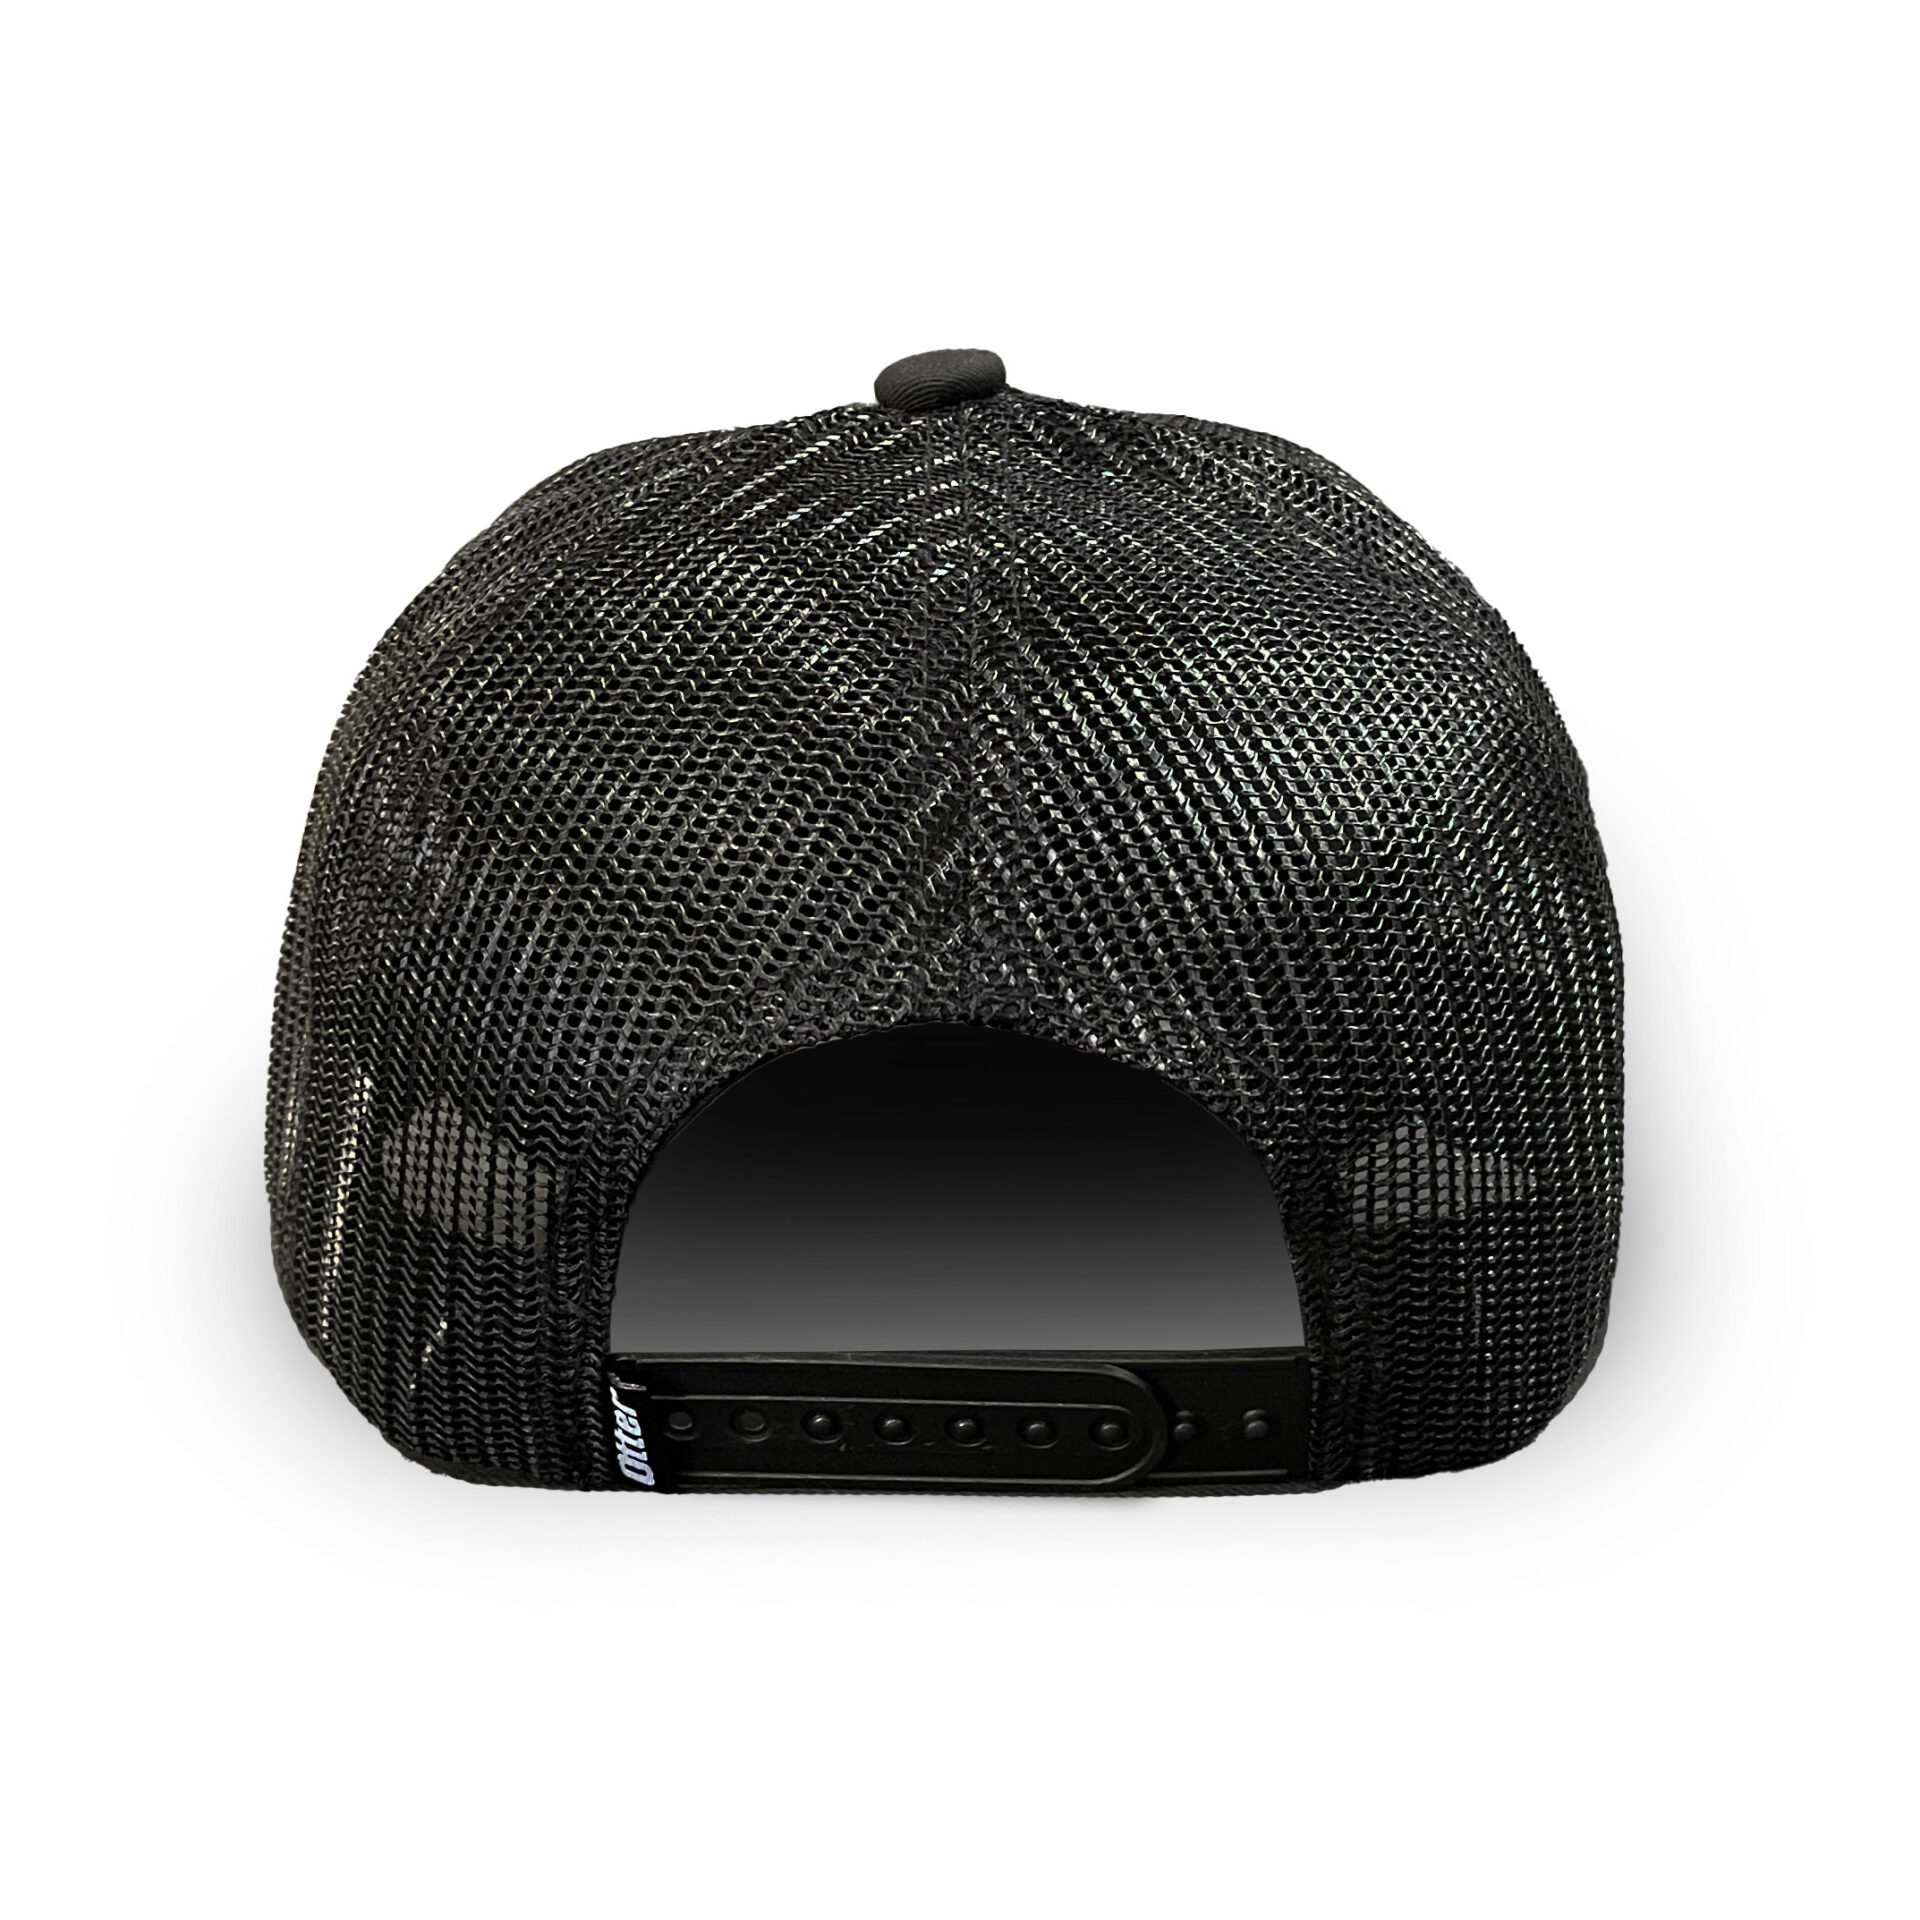  Snapback hat Half Size/Extender Black : Sports & Outdoors